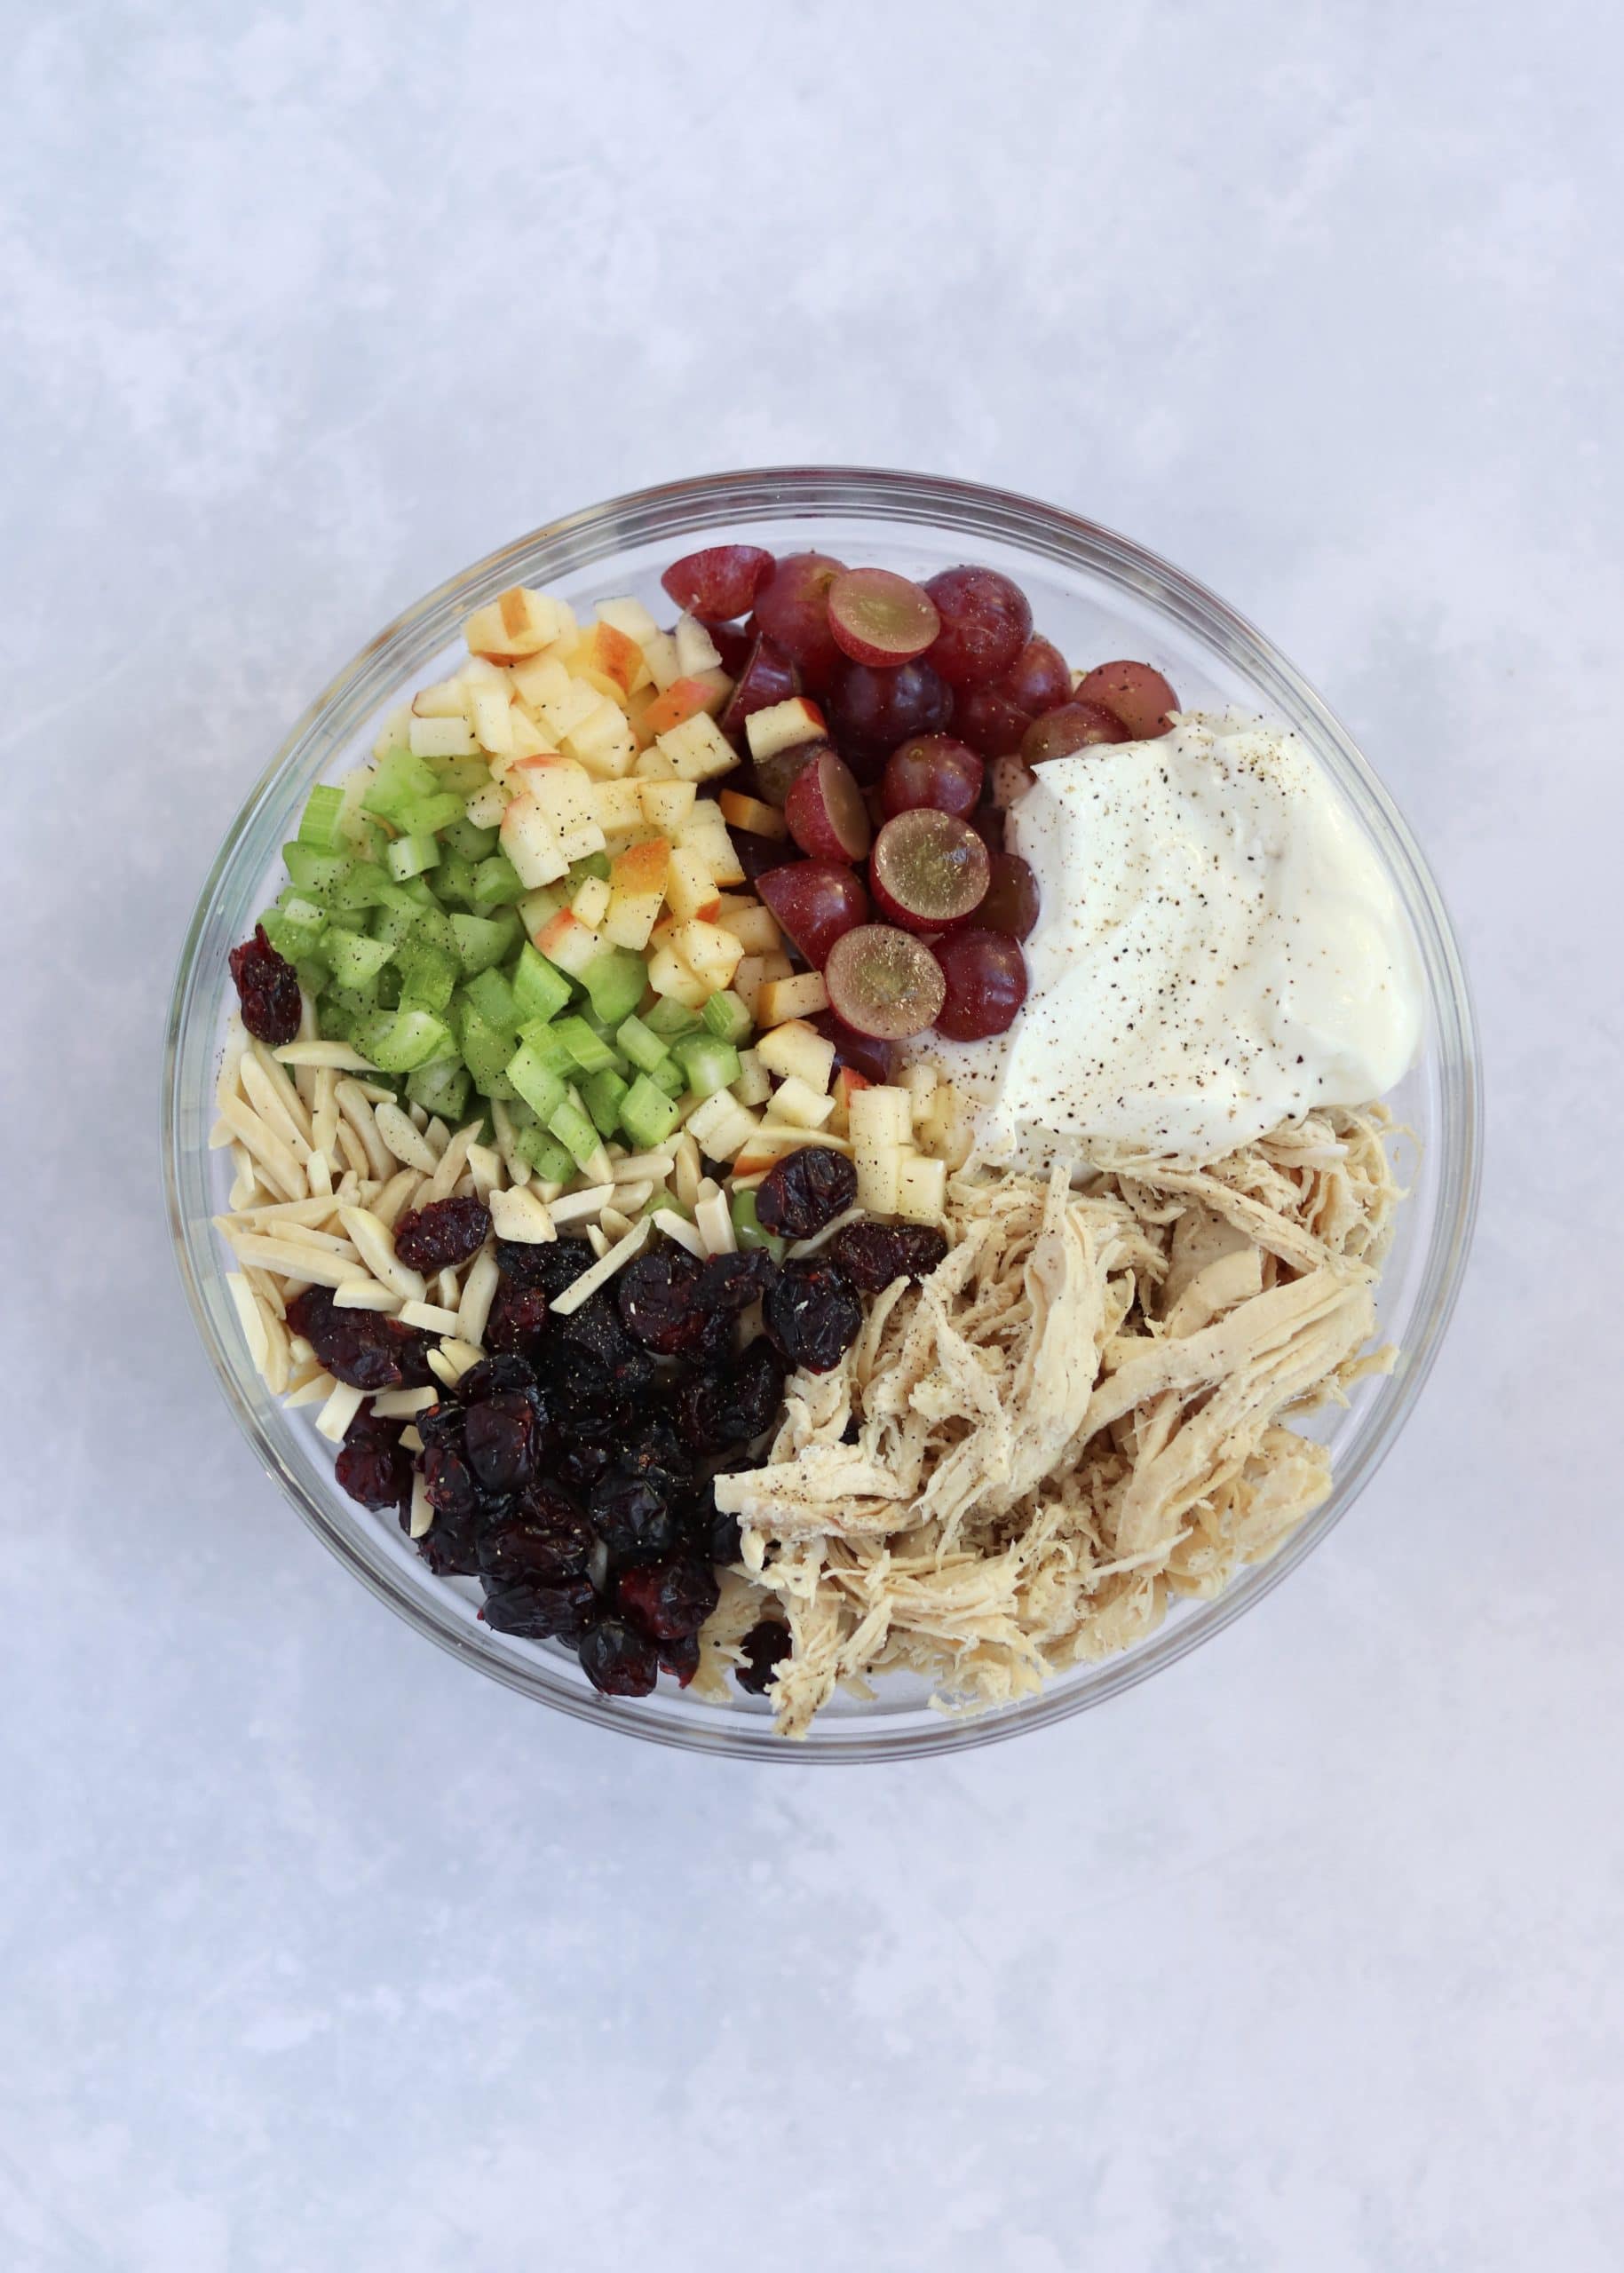 Chicken salad ingredients in glass bowl